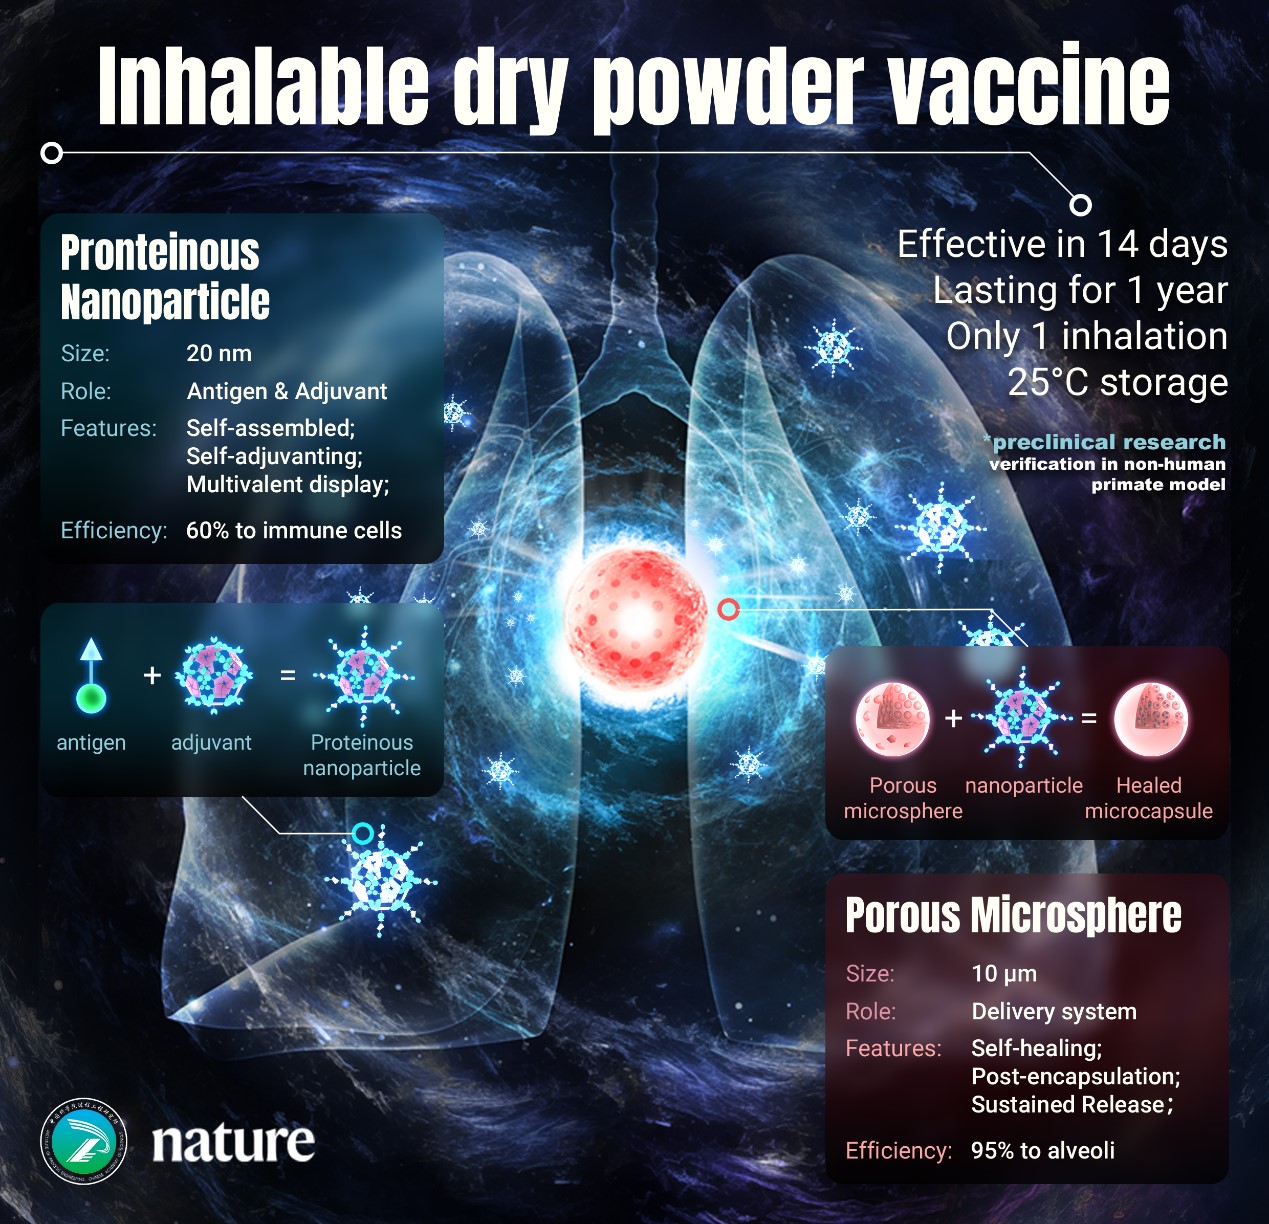 Construction of single-dose, dry powder inhalation vaccine